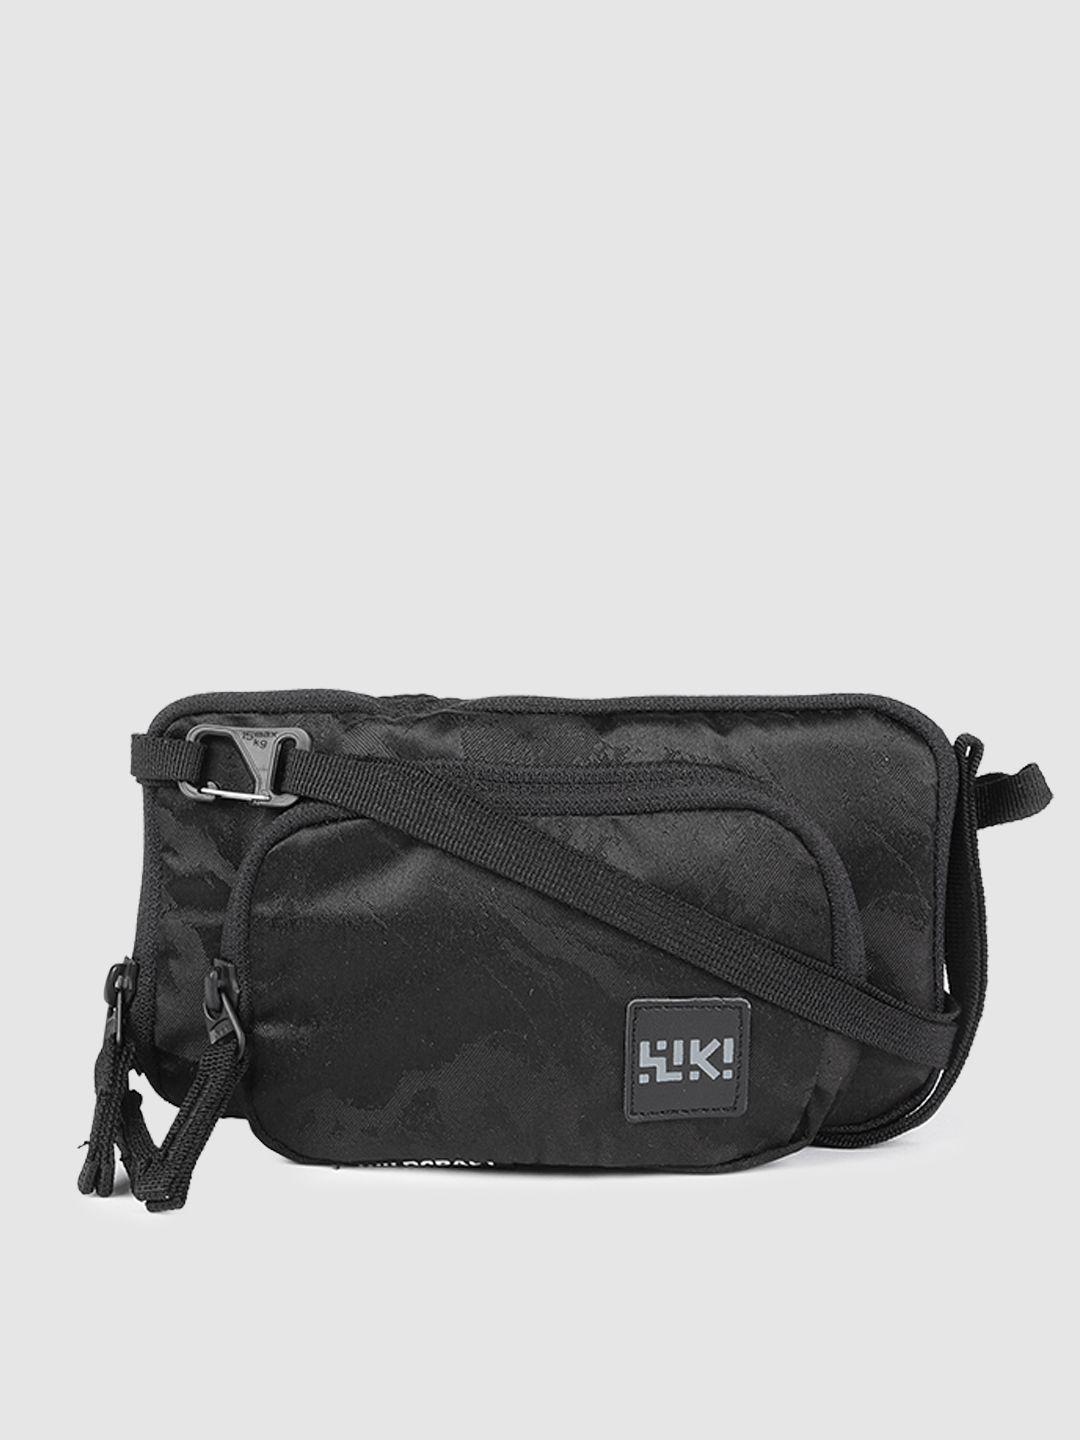 wildcraft unisex black textured stow-it messenger bag